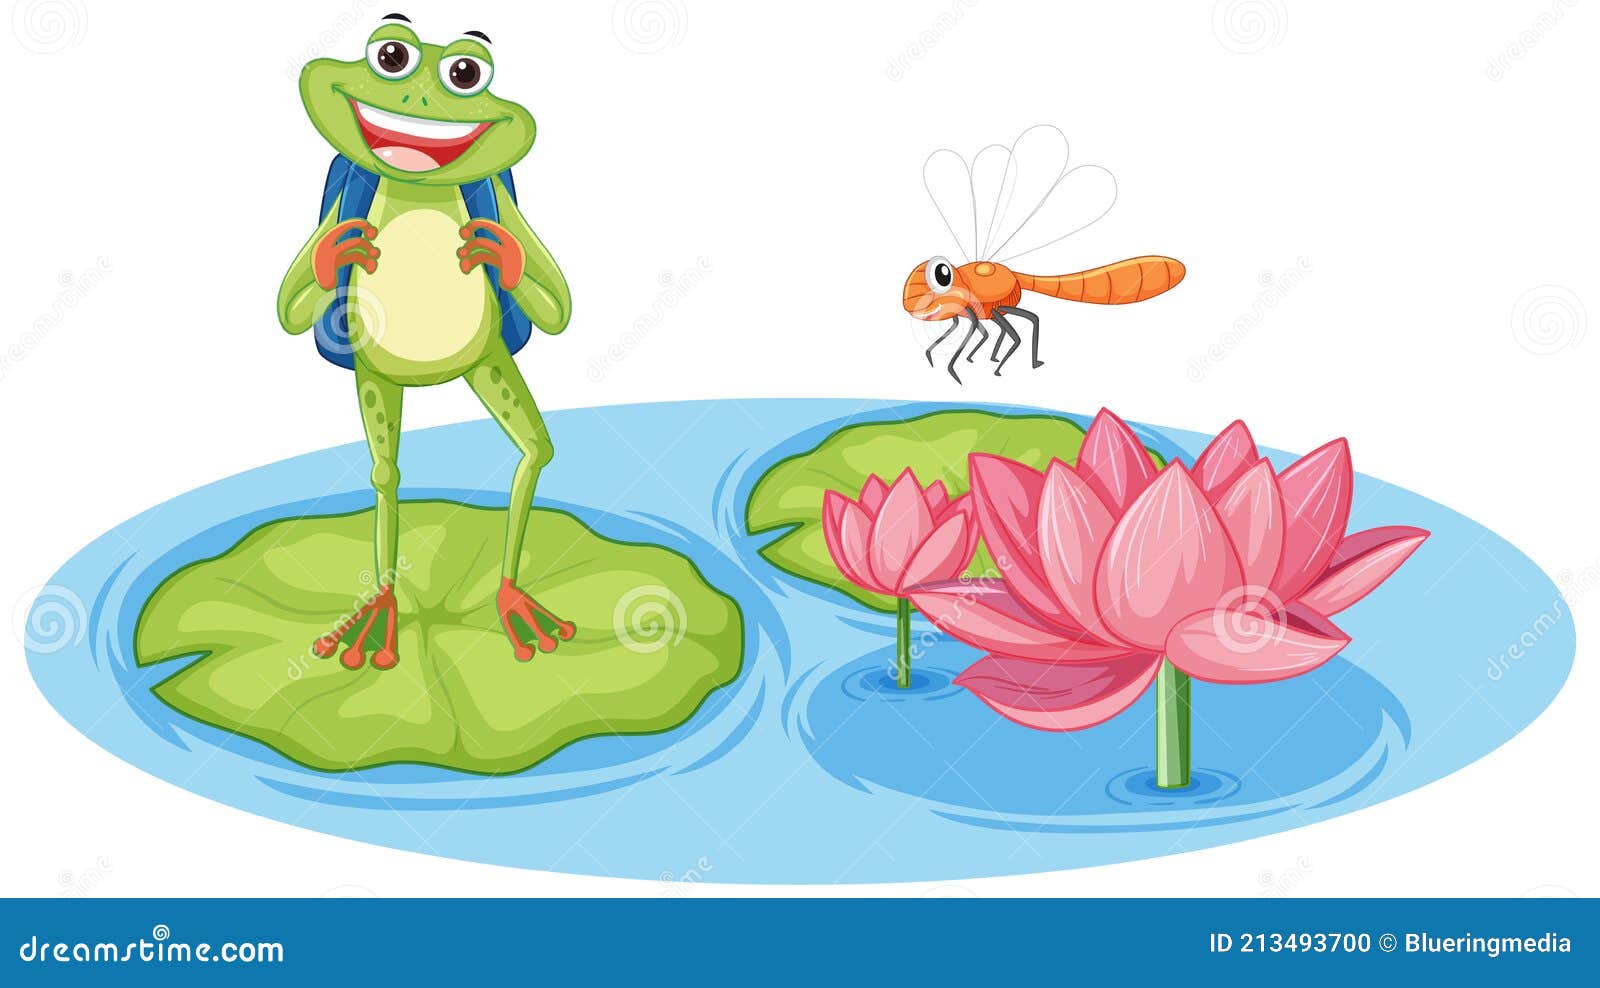 92 cm ALAZA Cartoon Frog Dragonfly Lotus Flower Round Area Rug for Living Room Bedroom 3' Diameter 